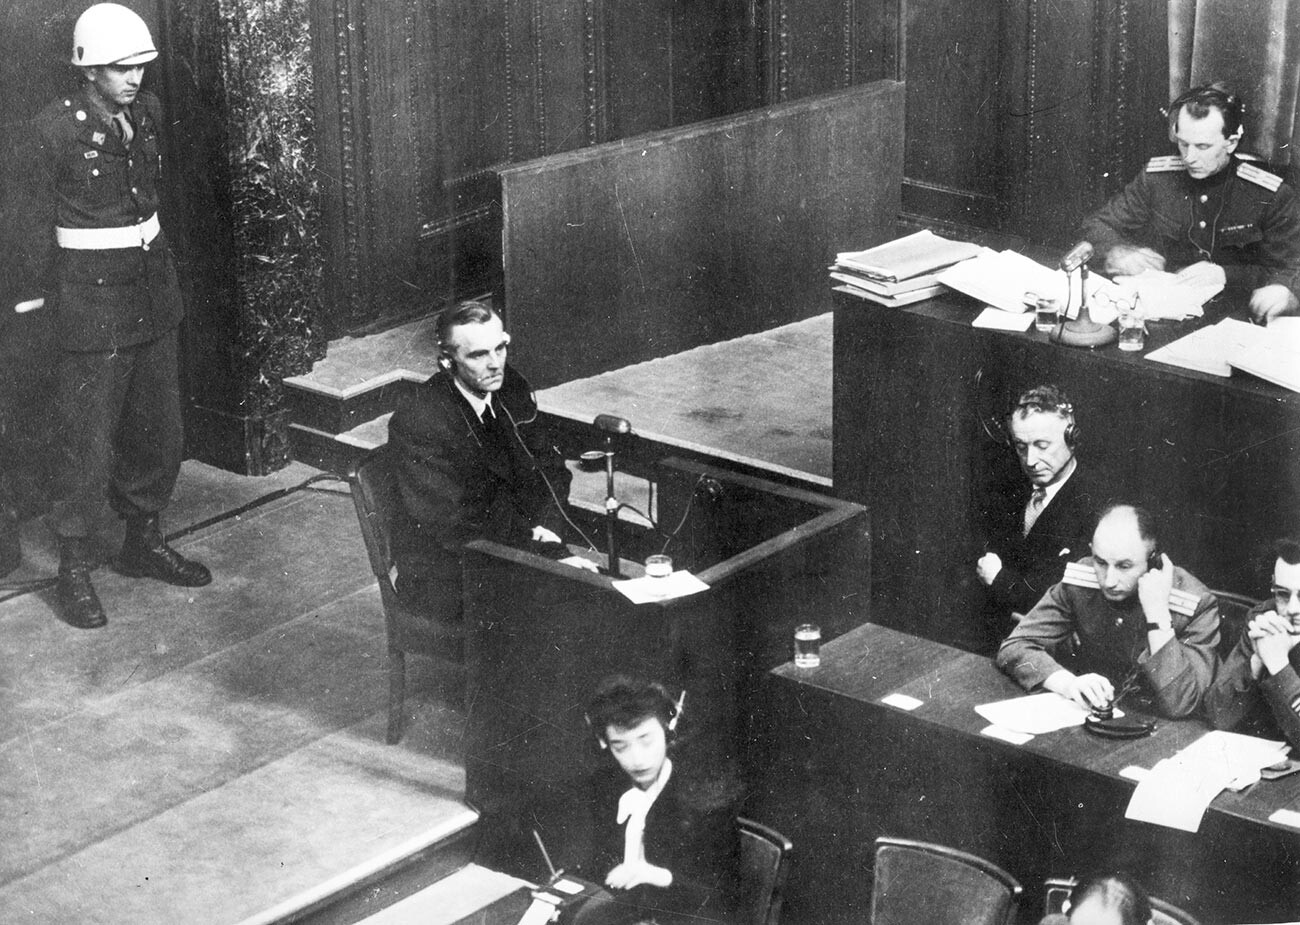 Friedrich Paulus during the Nuremberg Trials in 1946 